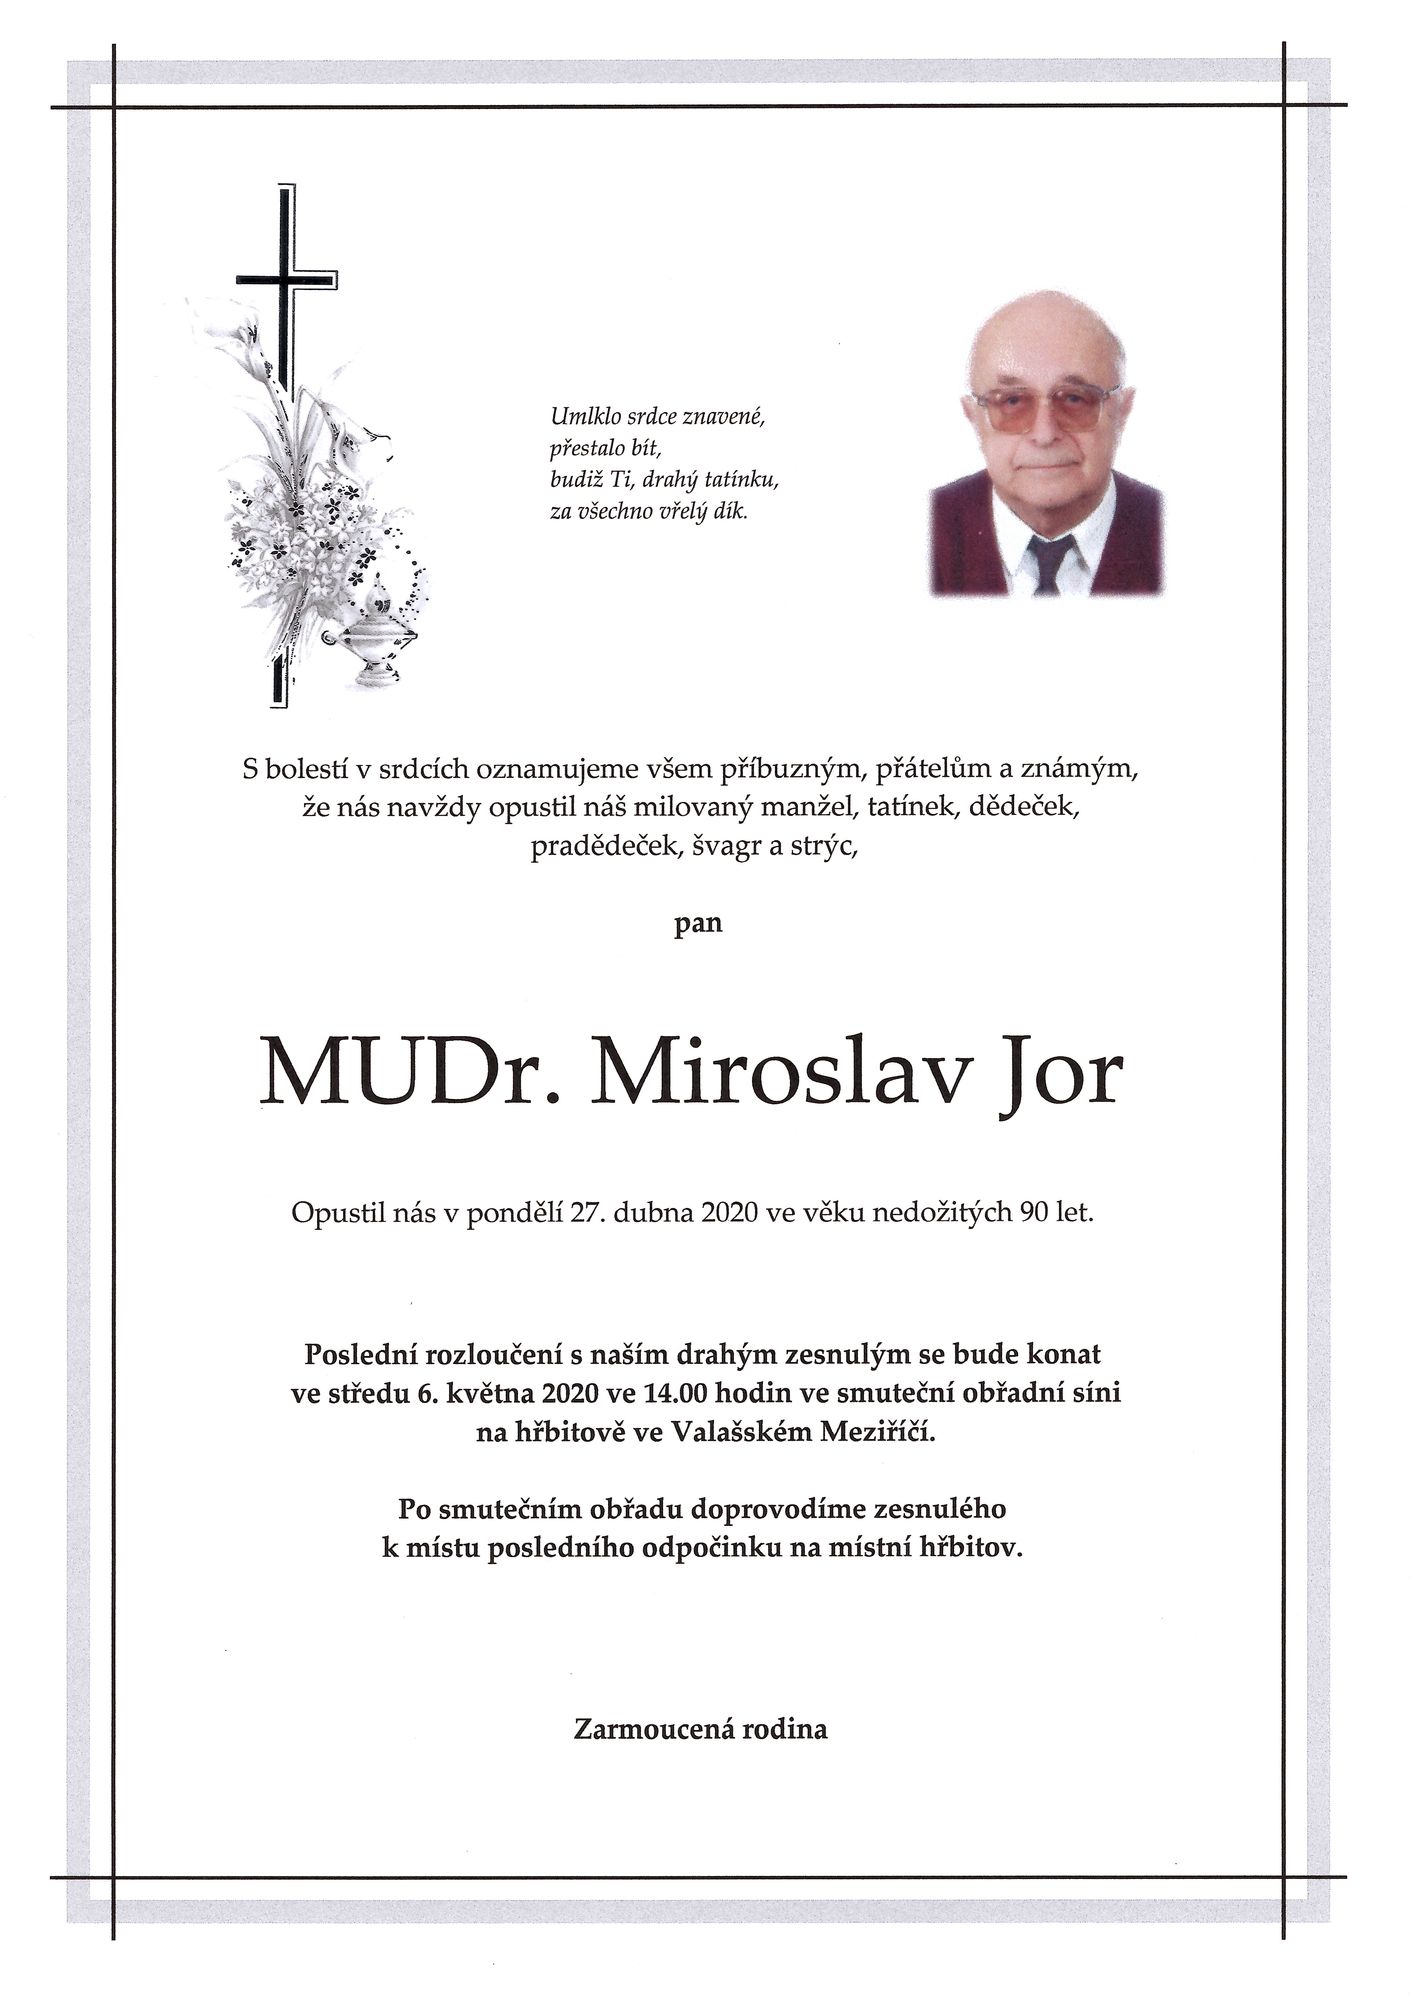 MUDr. Miroslav Jor